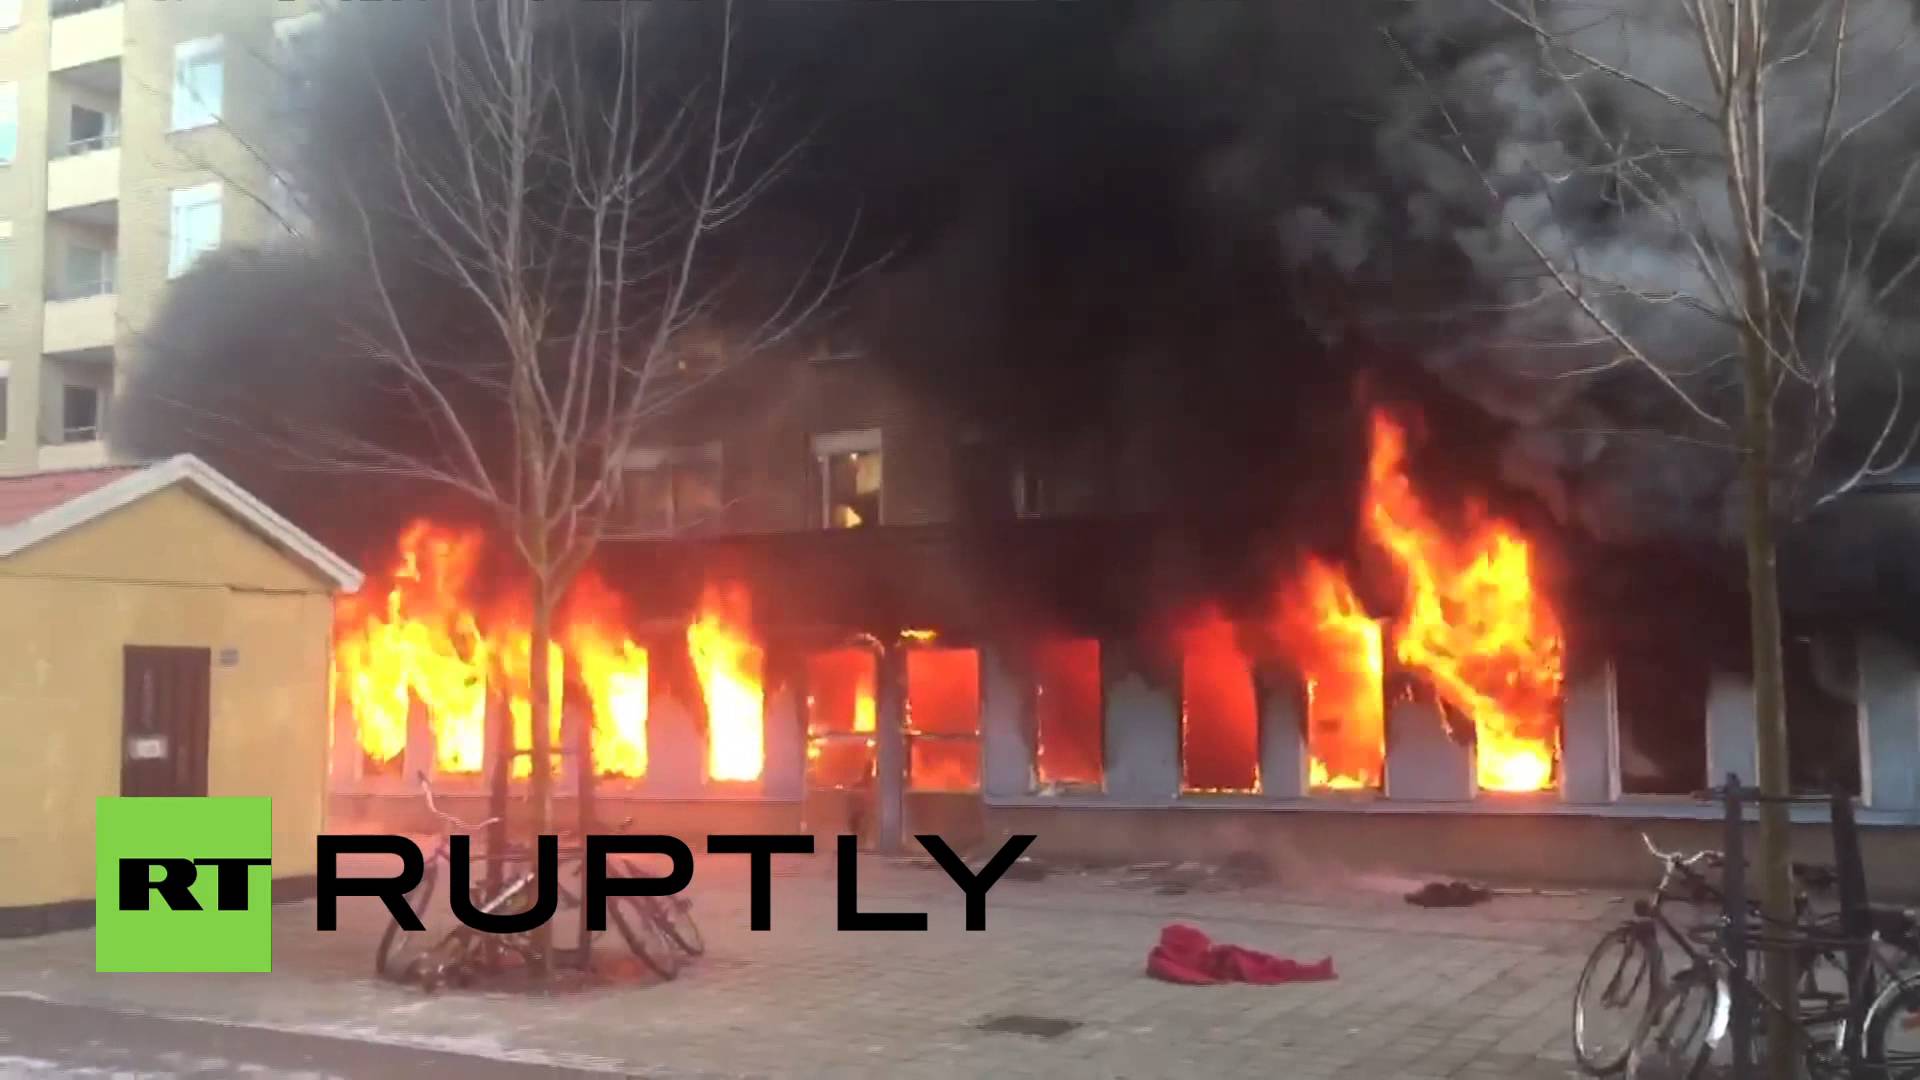 Sweden: Arsonists set fire to mosque in Eskilstuna, injuring 5 - YouTube